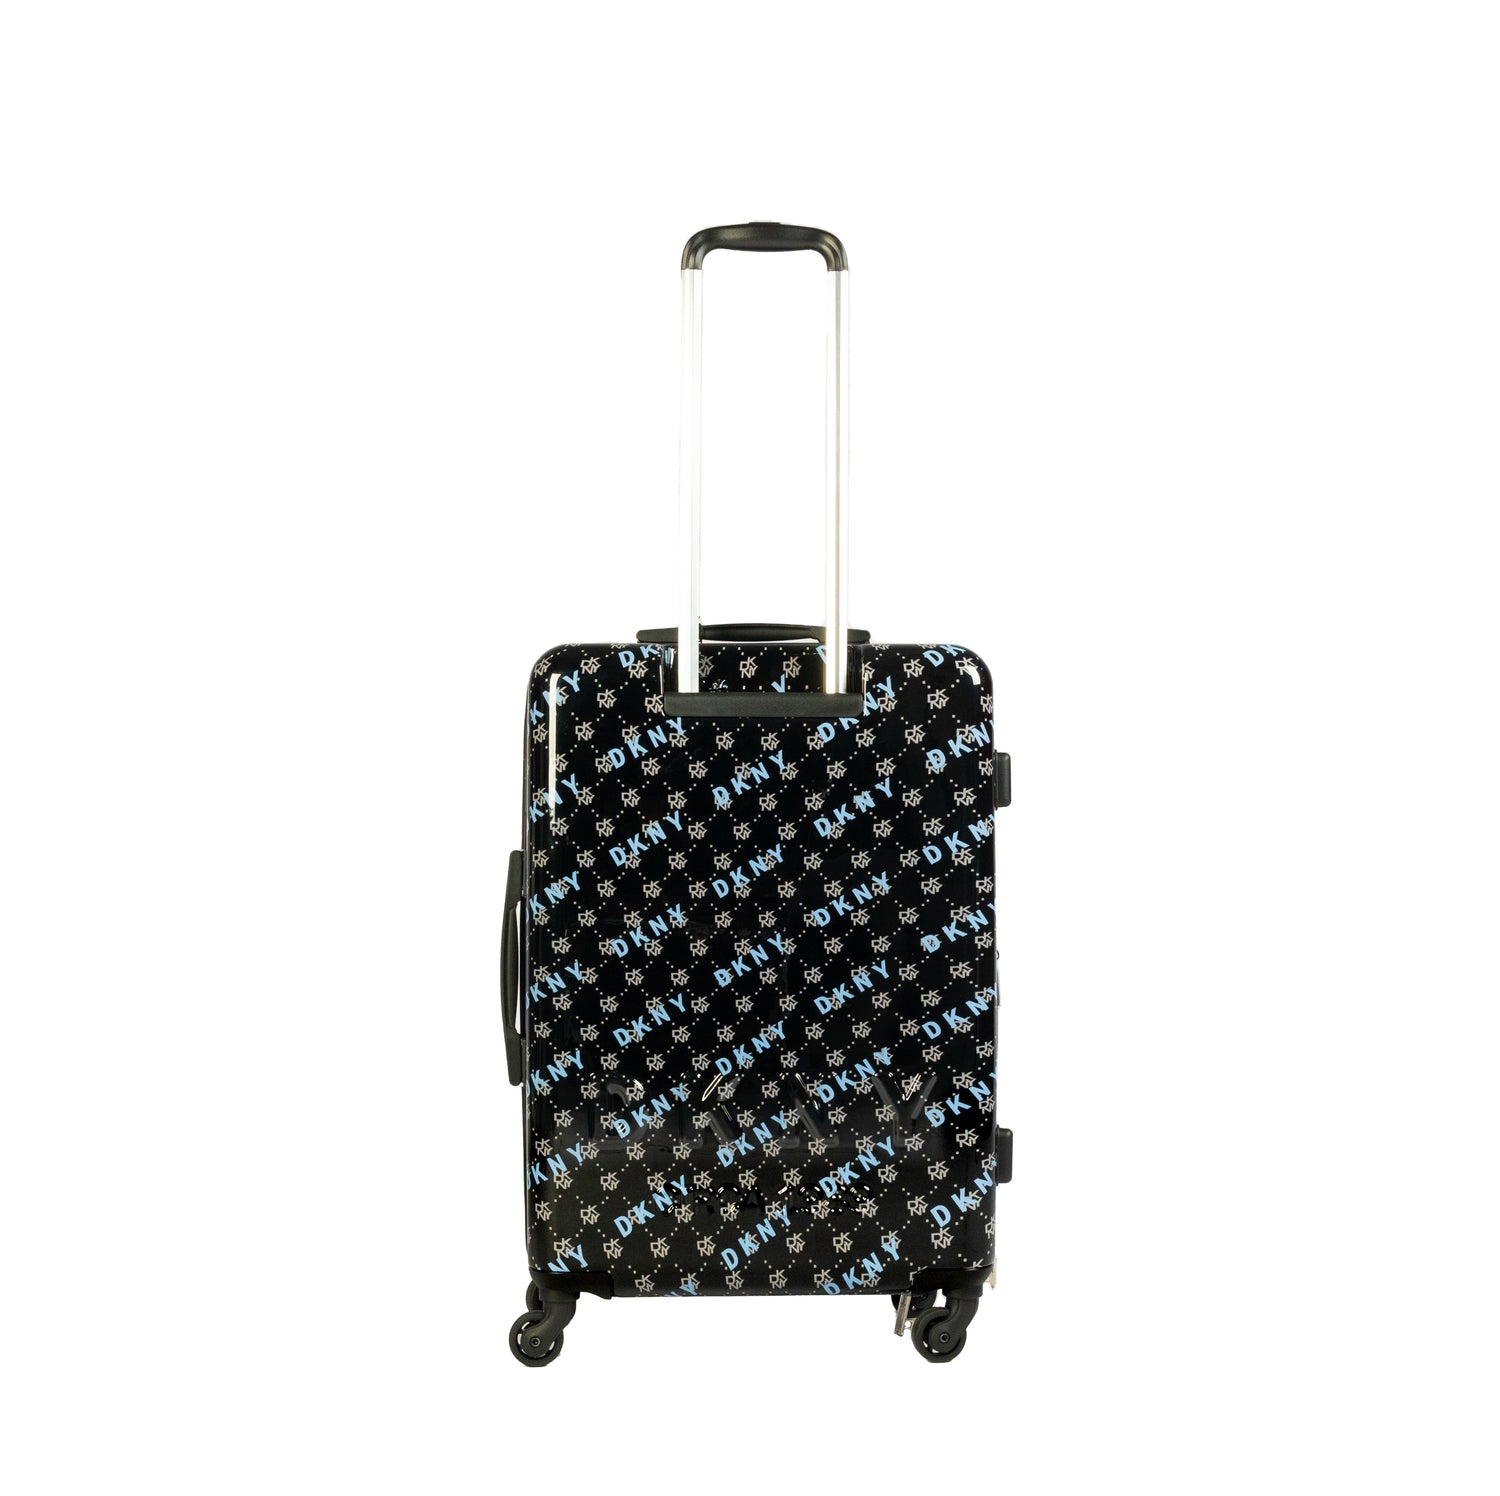 DKNY Black Medium Luggage